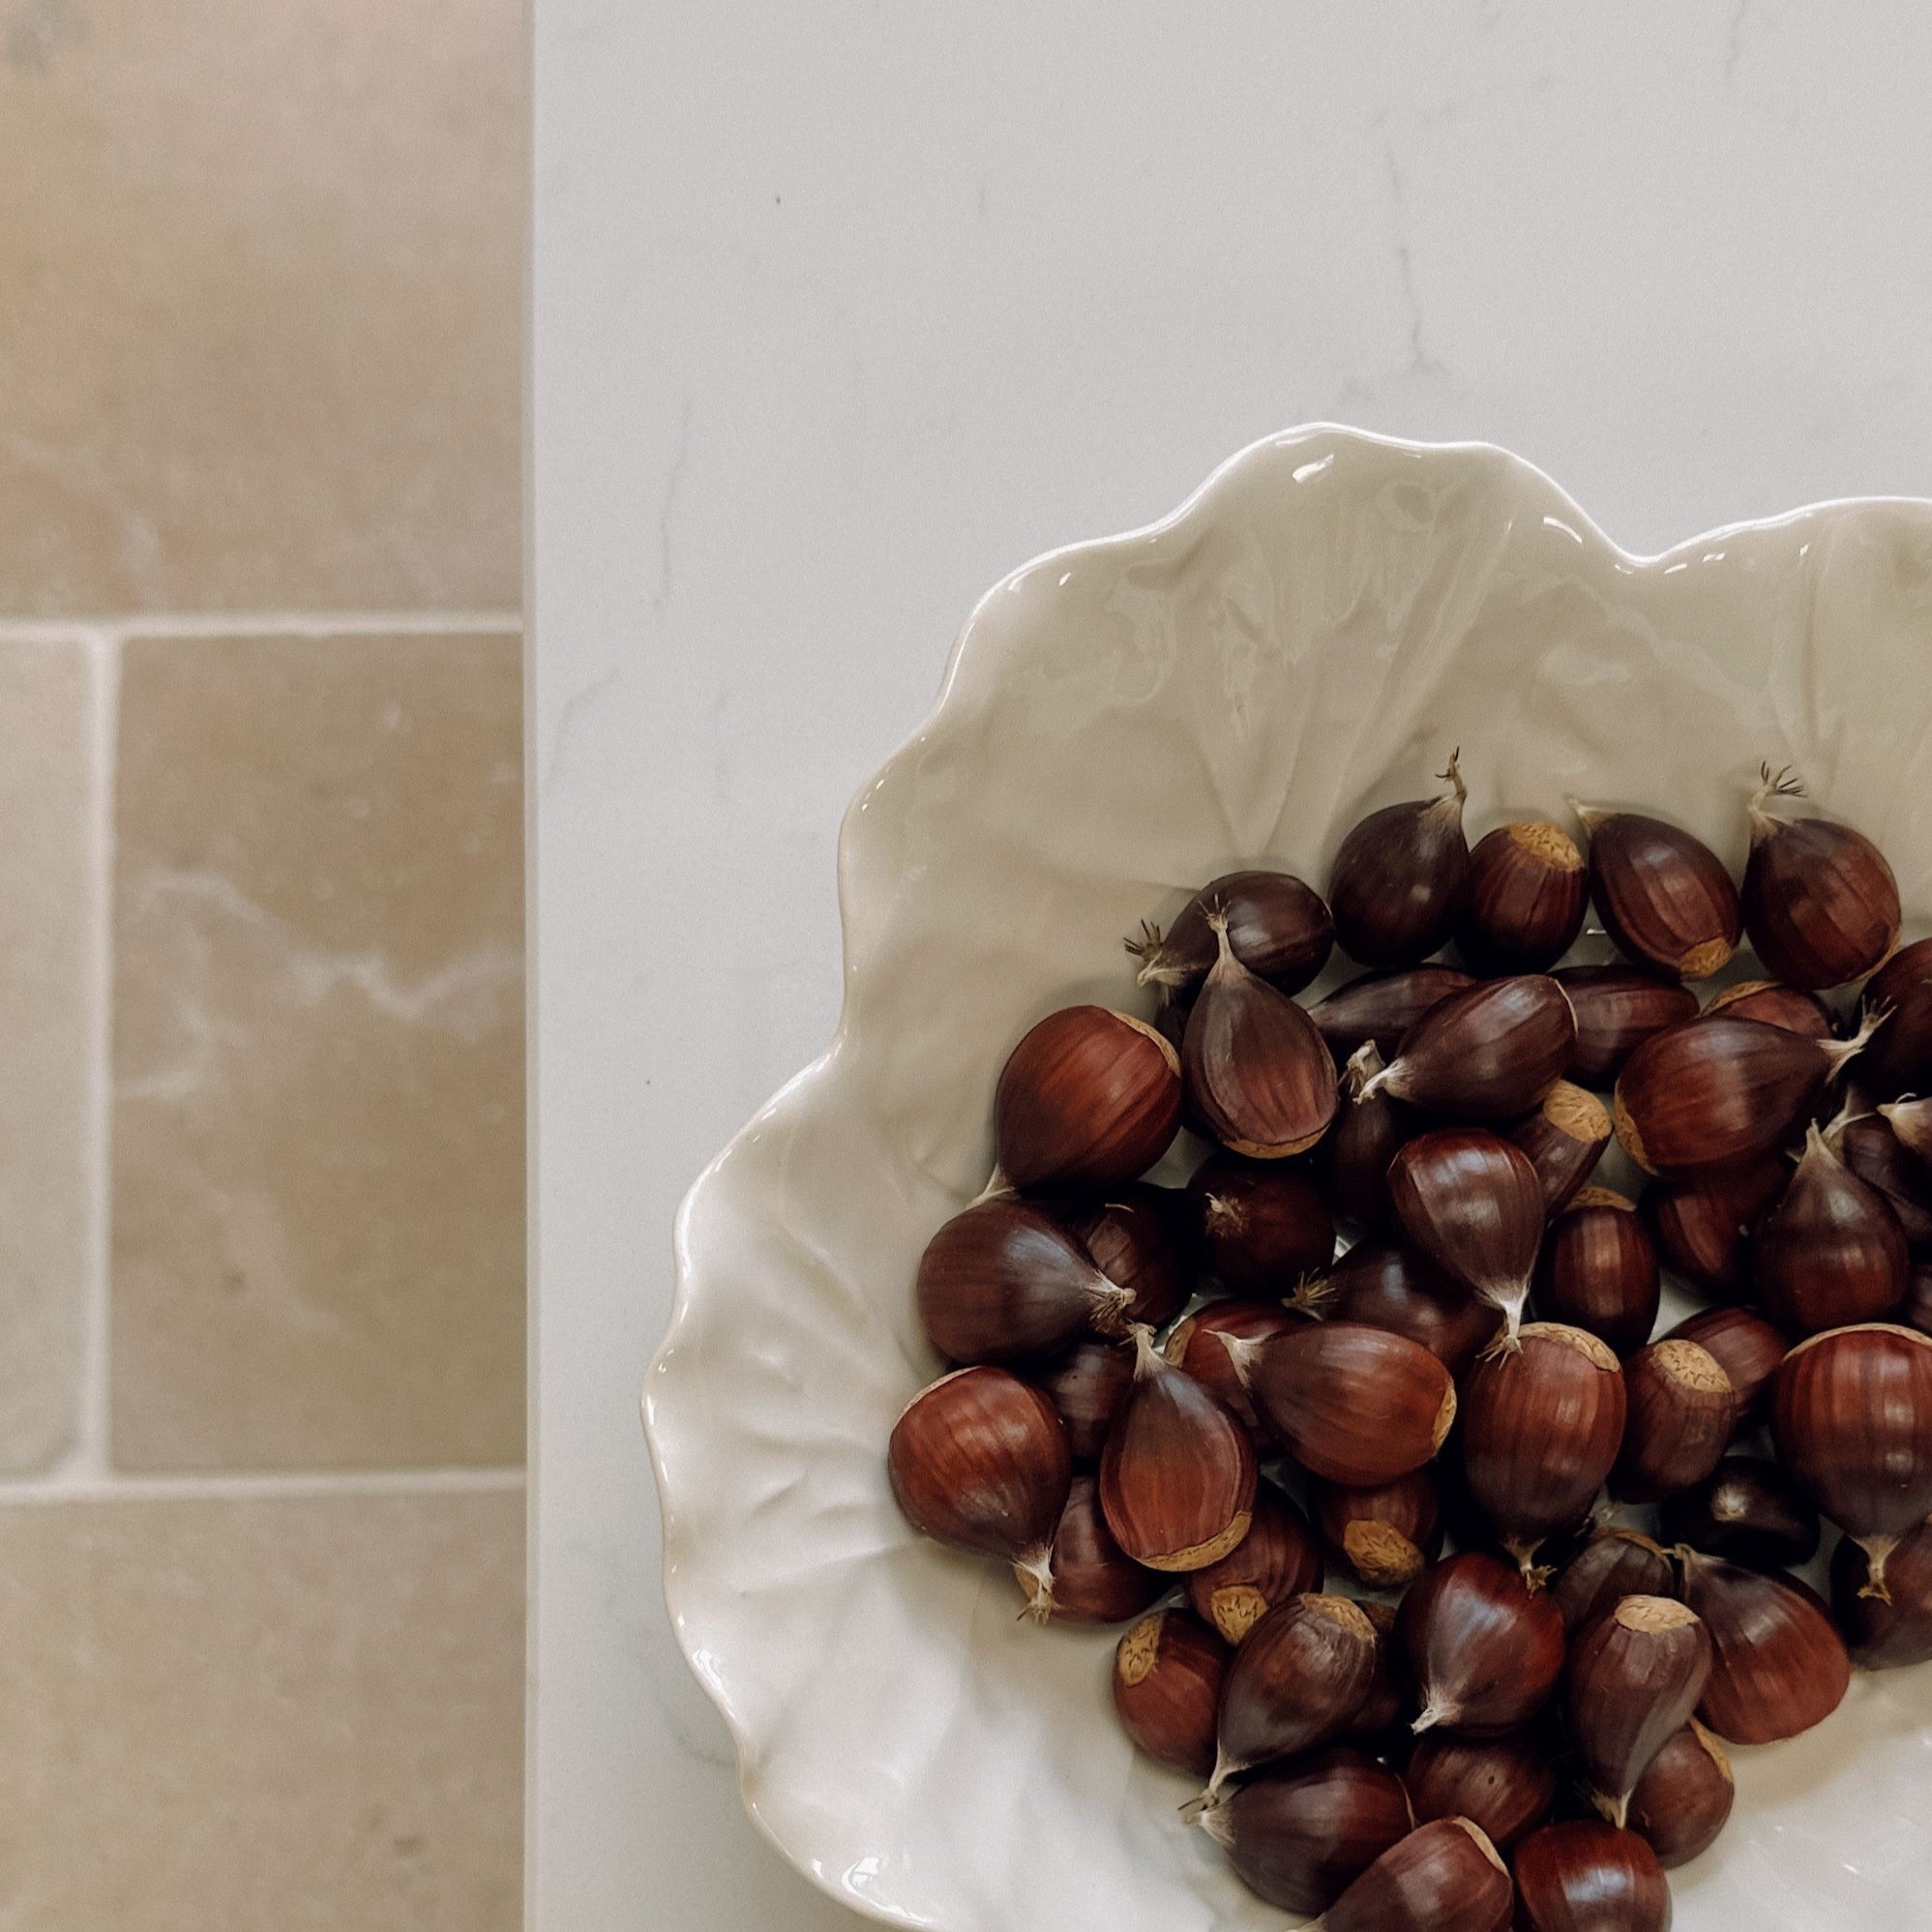 Foraged sweet chestnuts